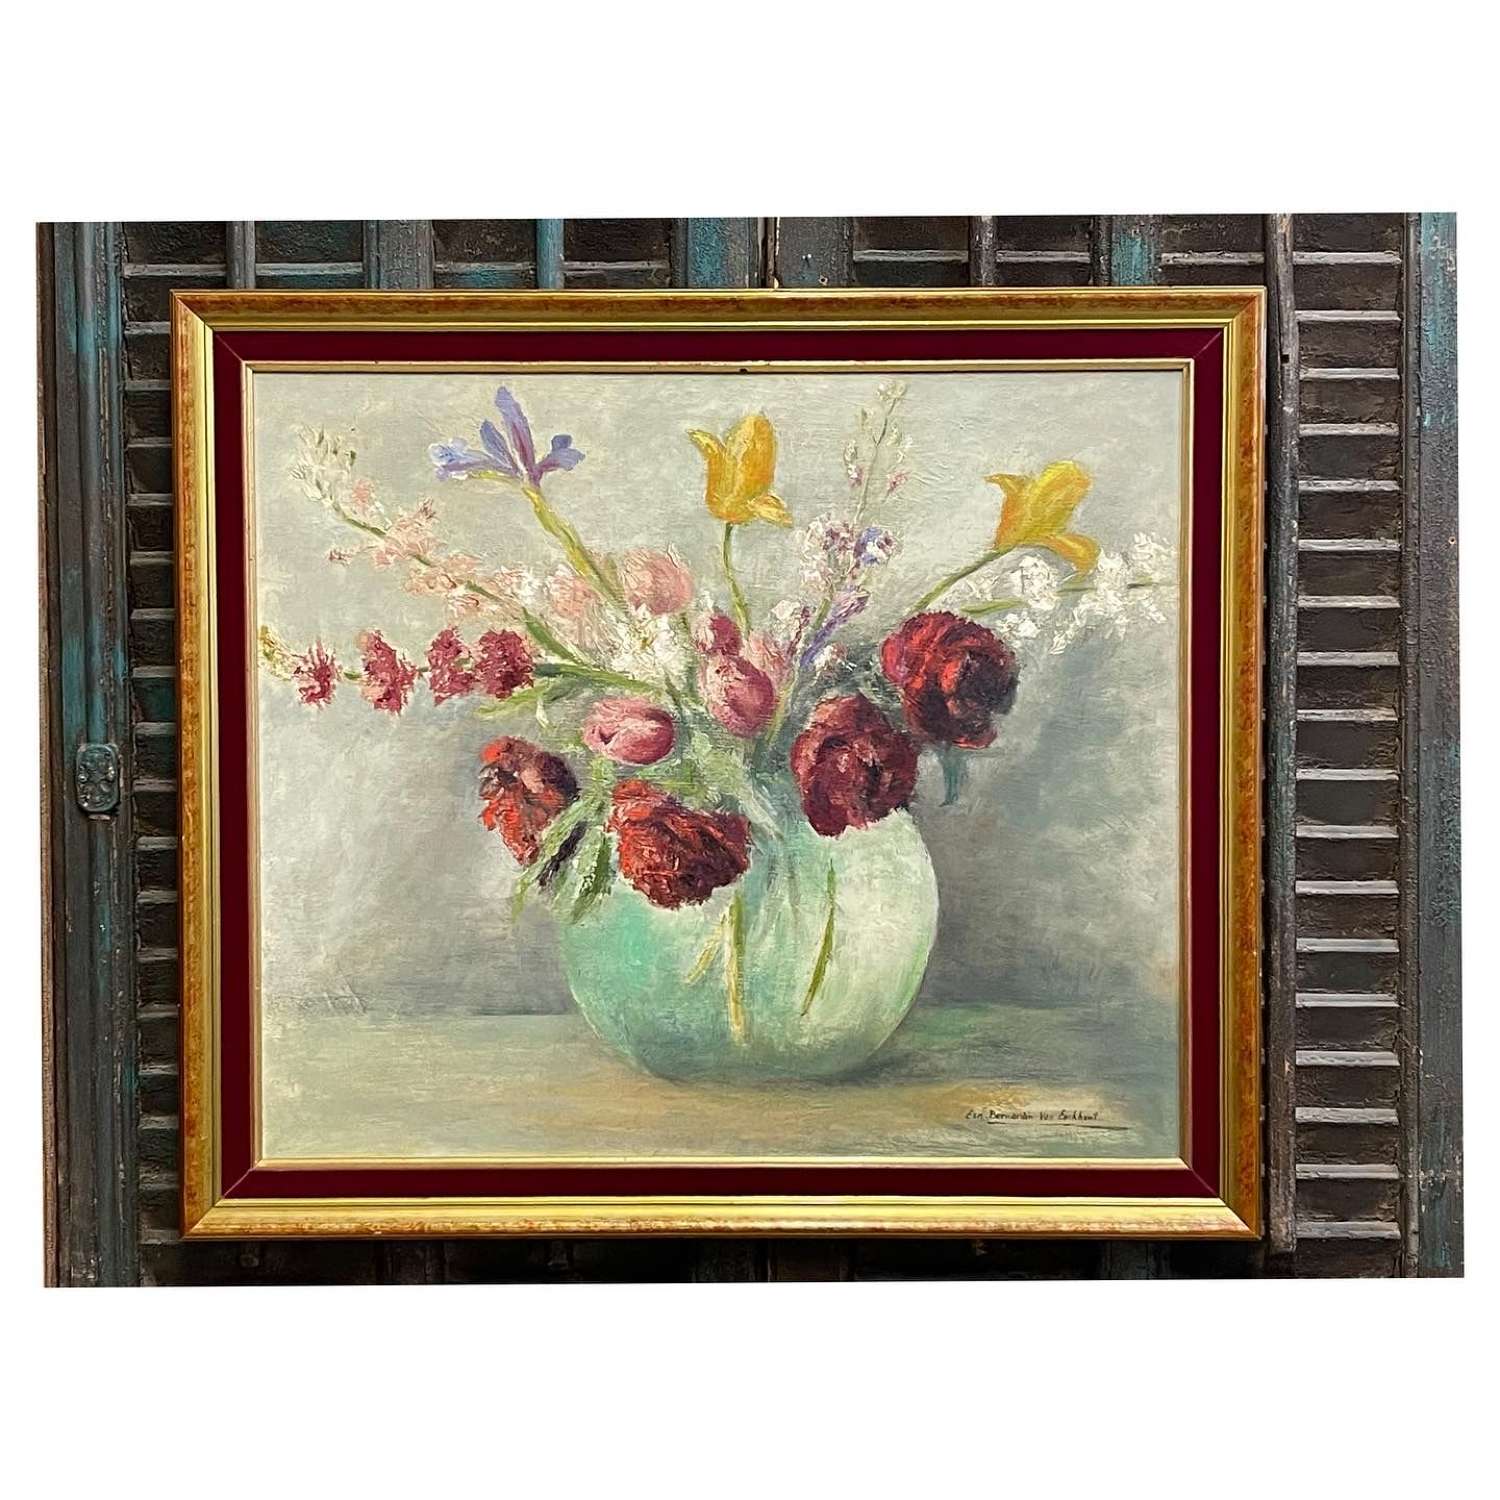 Dutch Floral Oil on Canvas c 1930-40